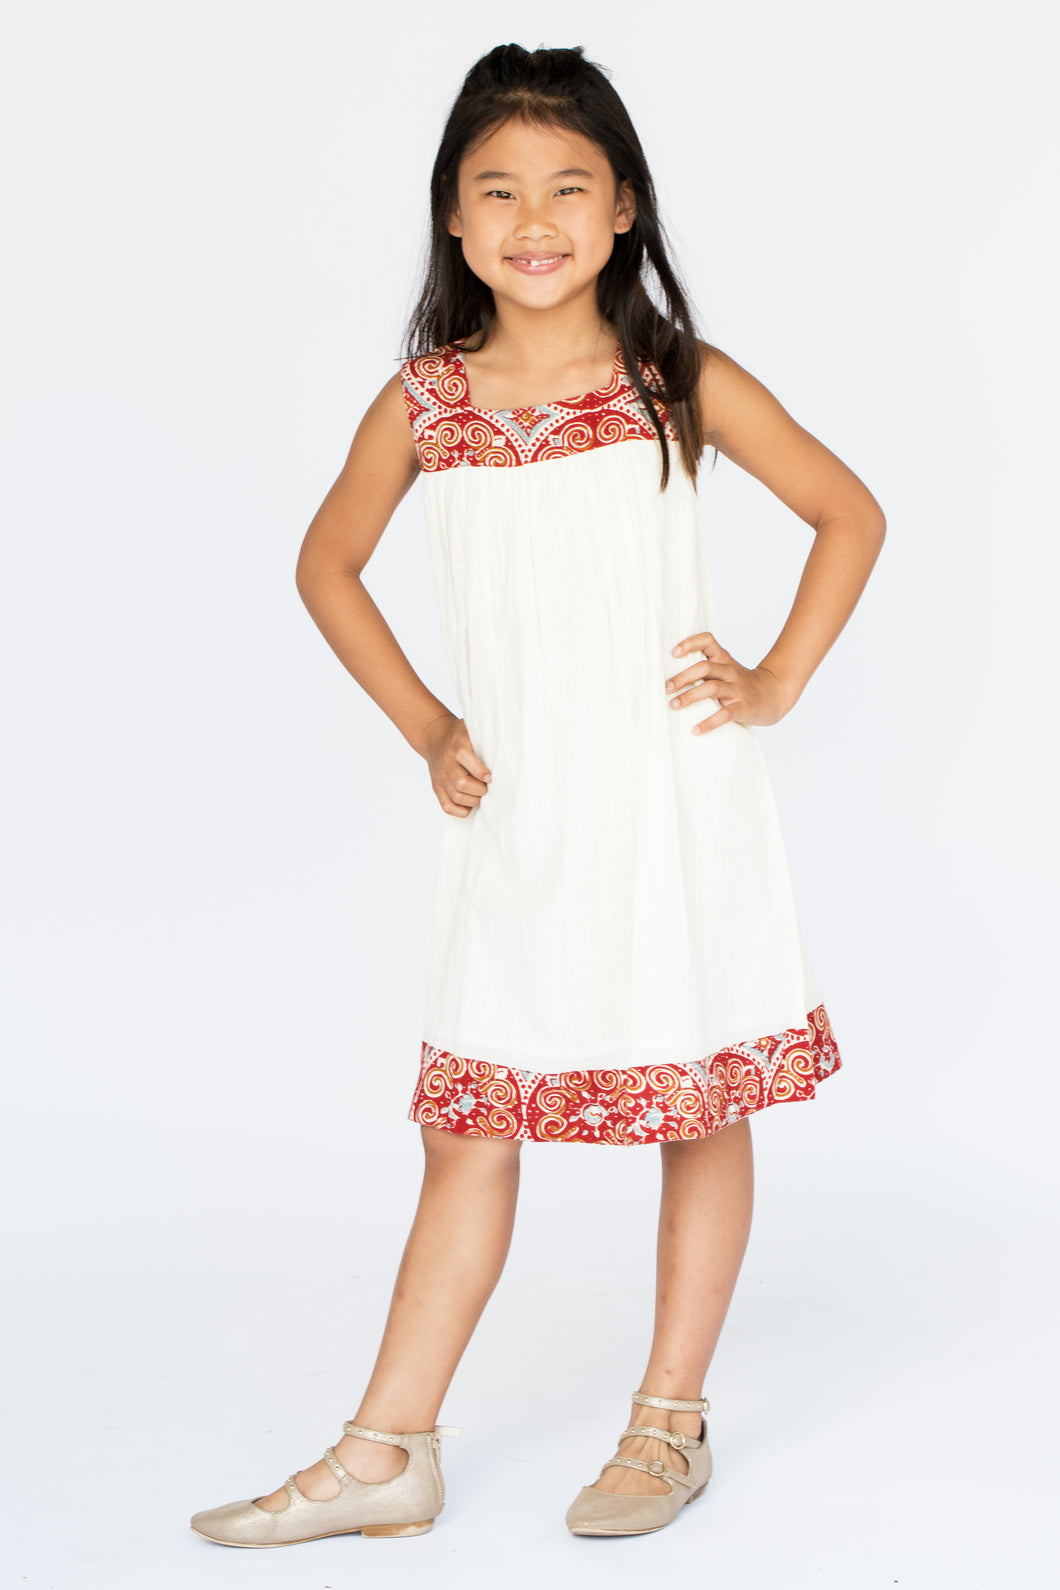 Red & White Baby Doll Dress - Kids Wholesale Boutique Clothing, Dress - Girls Dresses, Yo Baby Wholesale - Yo Baby